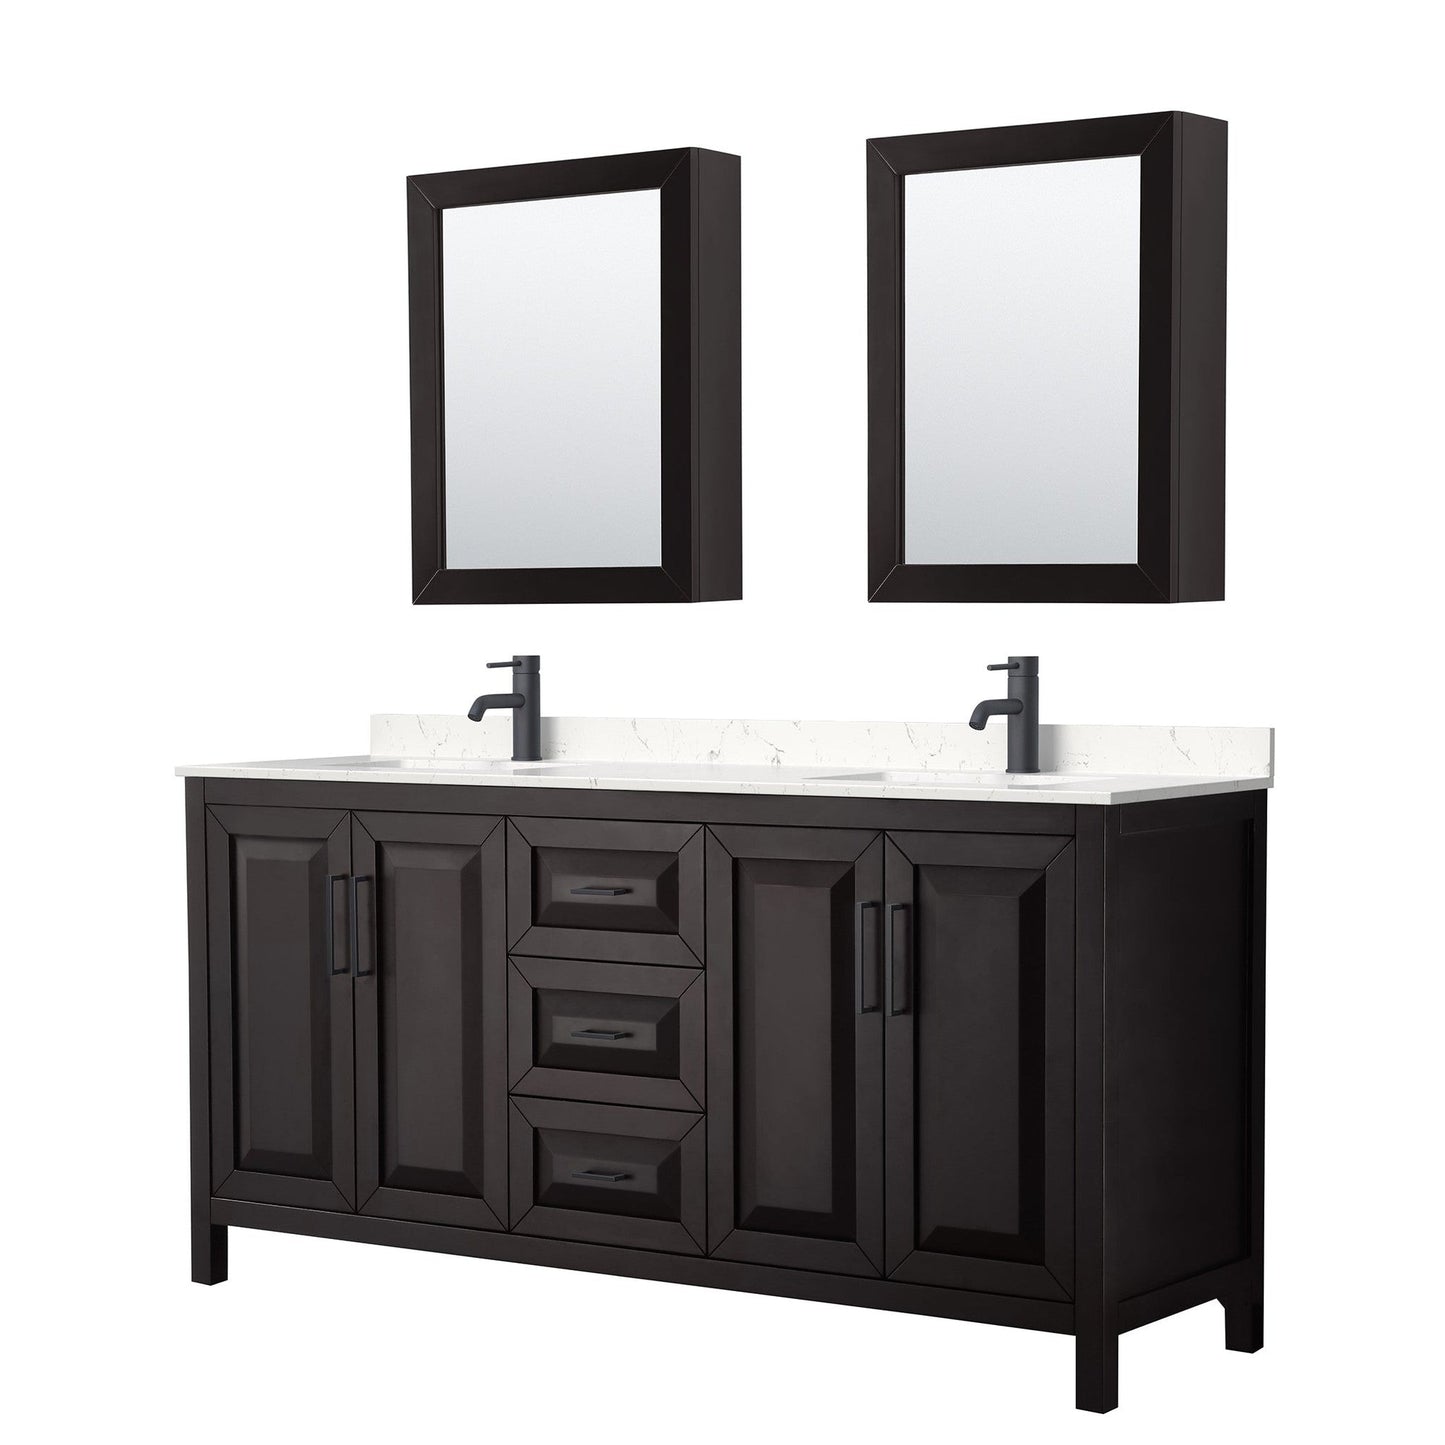 Daria 72" Double Bathroom Vanity in Dark Espresso, Carrara Cultured Marble Countertop, Undermount Square Sinks, Matte Black Trim, Medicine Cabinets